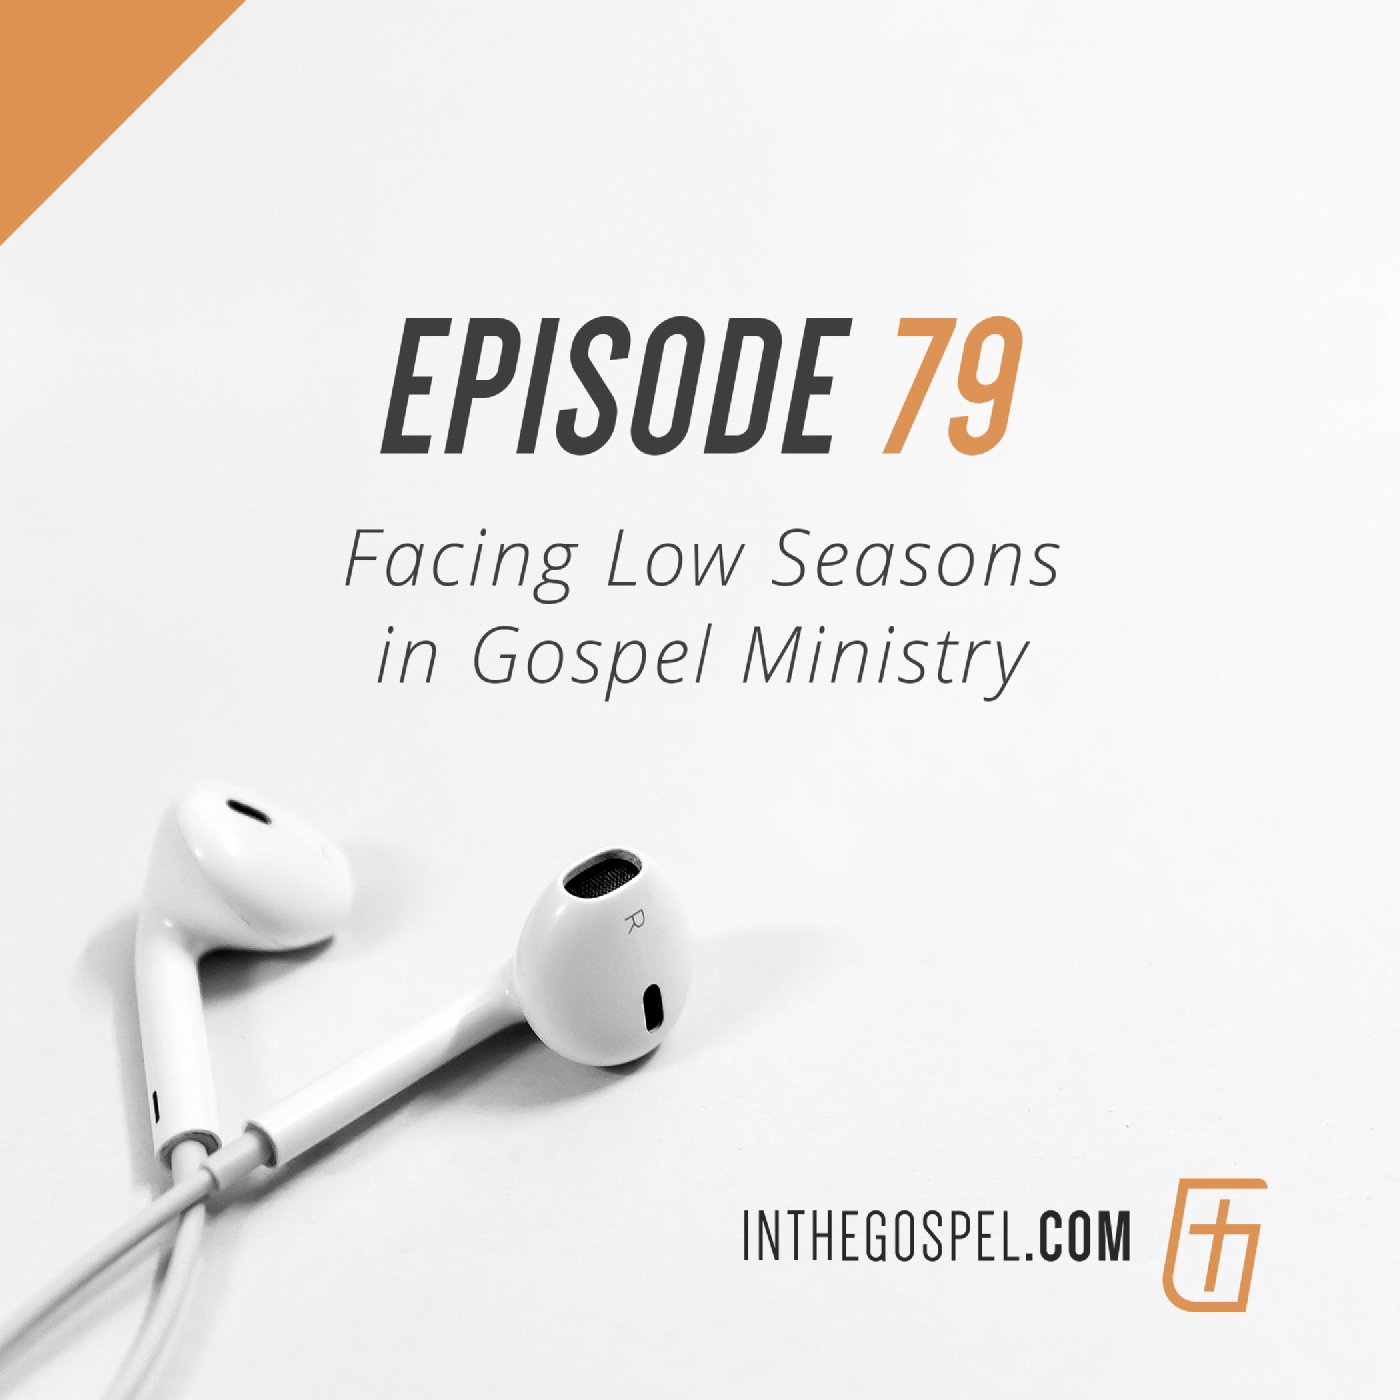 Episode 79: Facing Low Seasons in Gospel Ministry